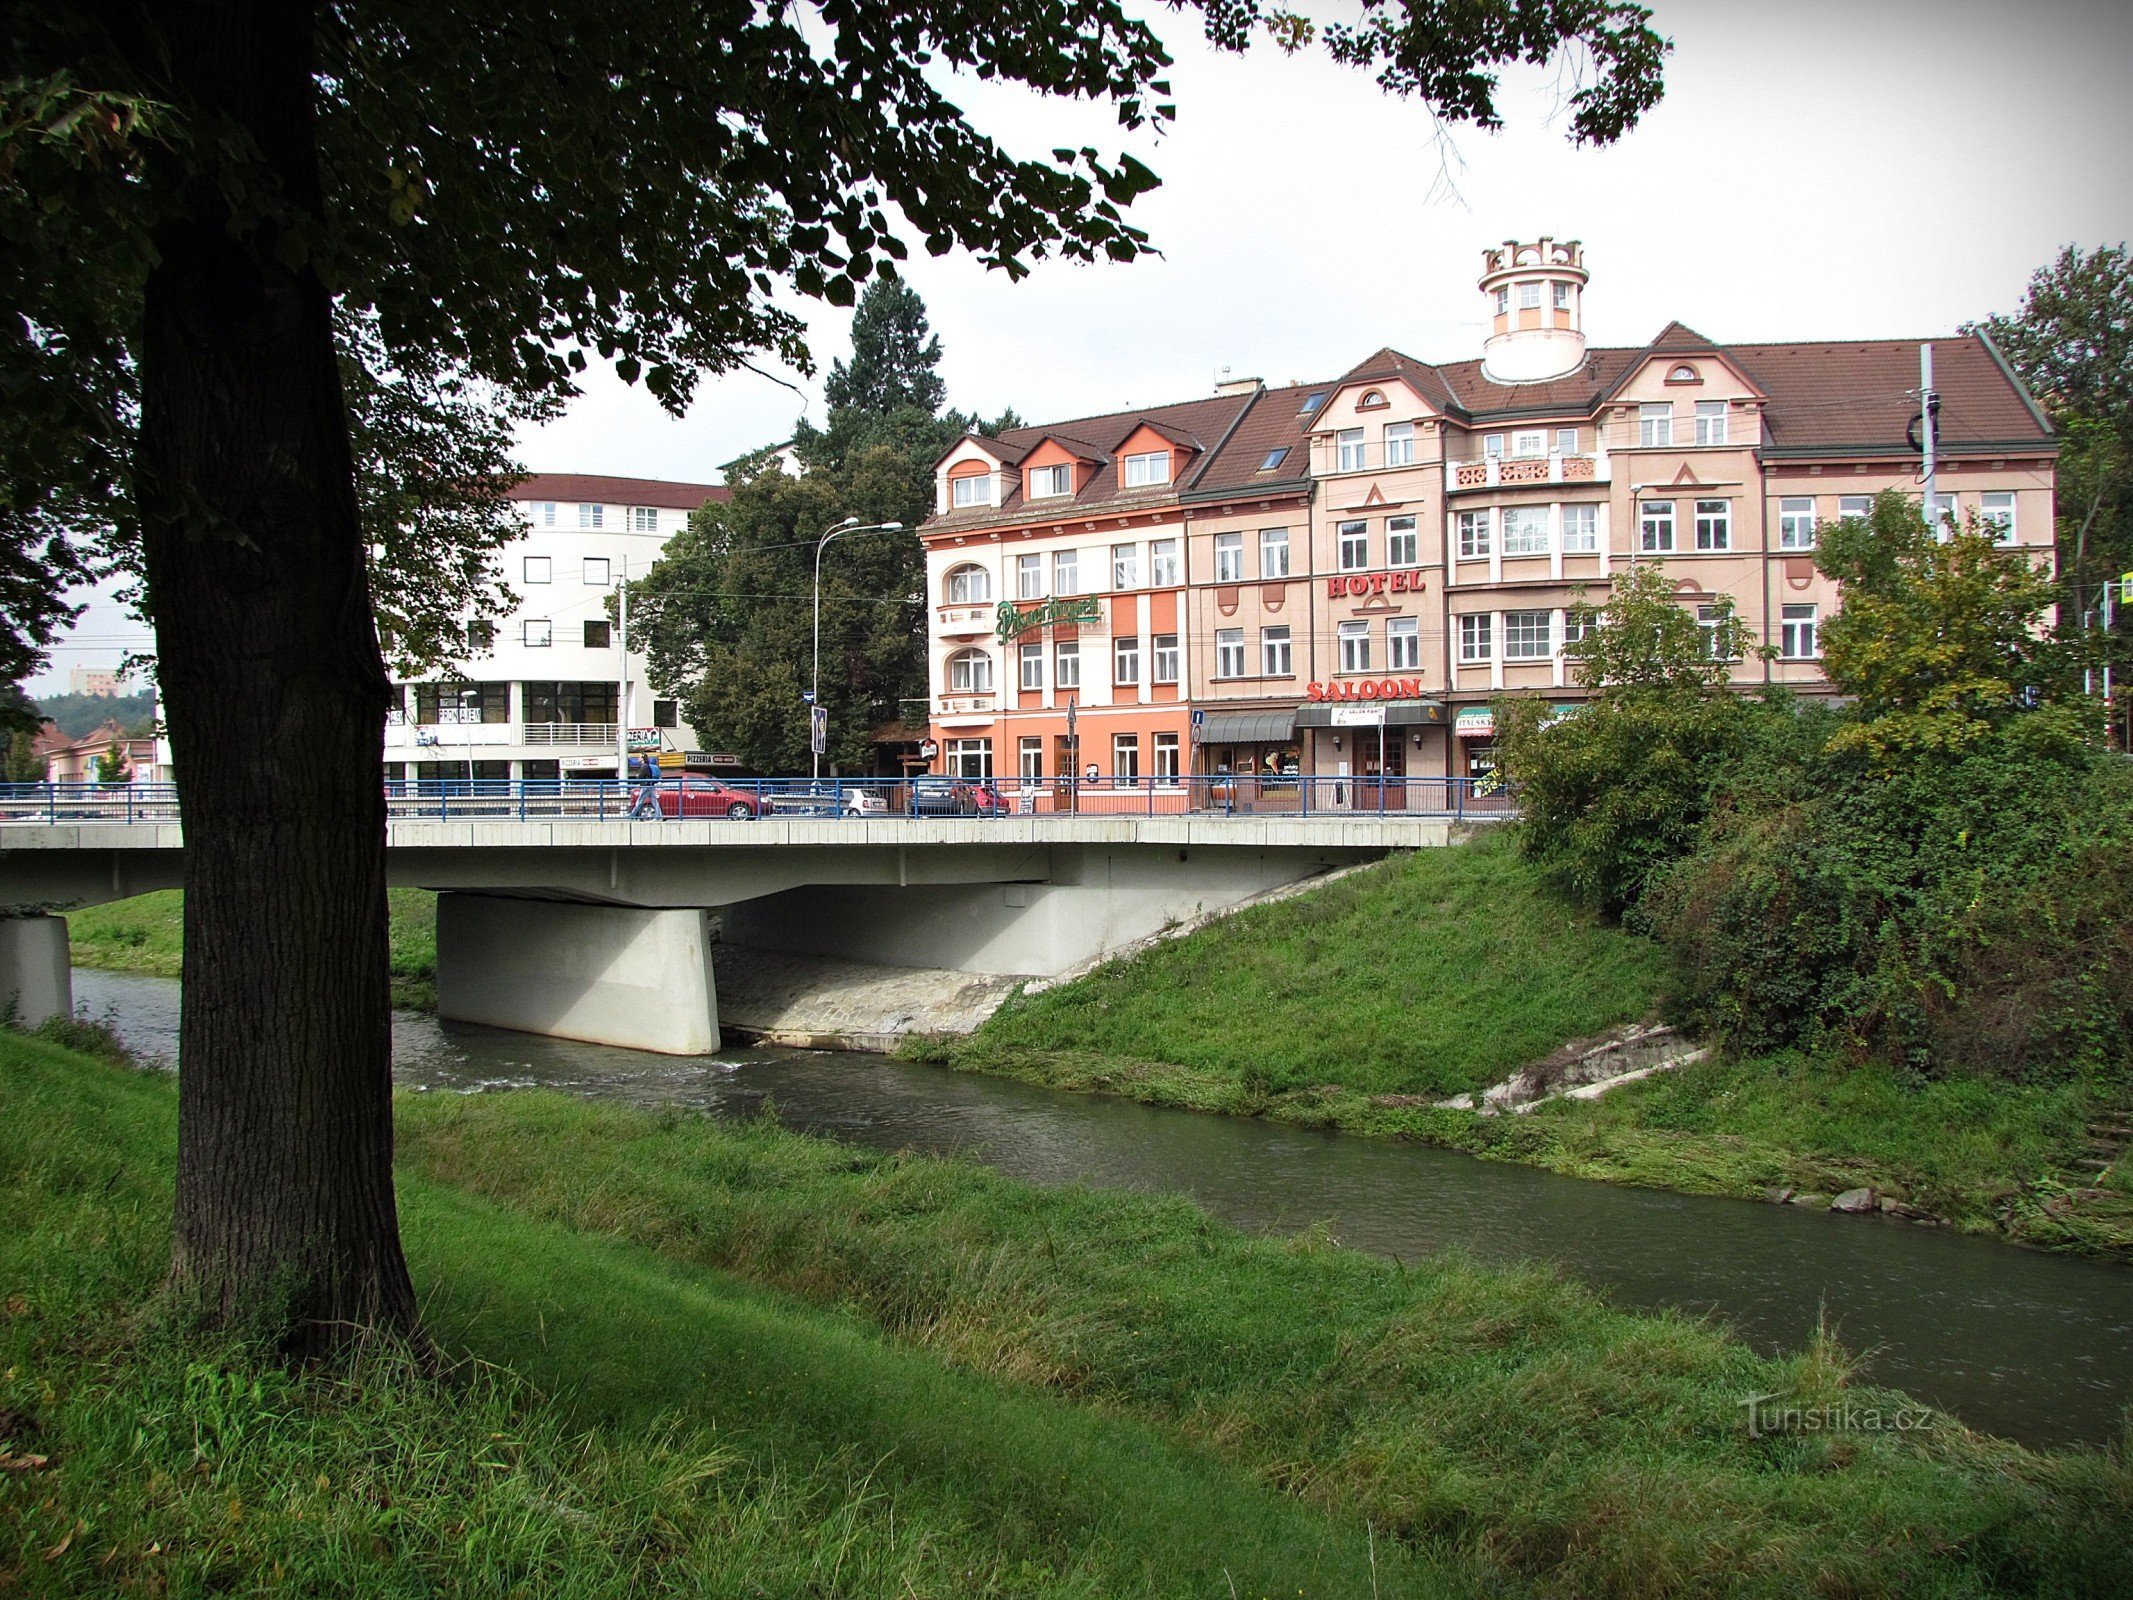 Zlín bridges and footbridges